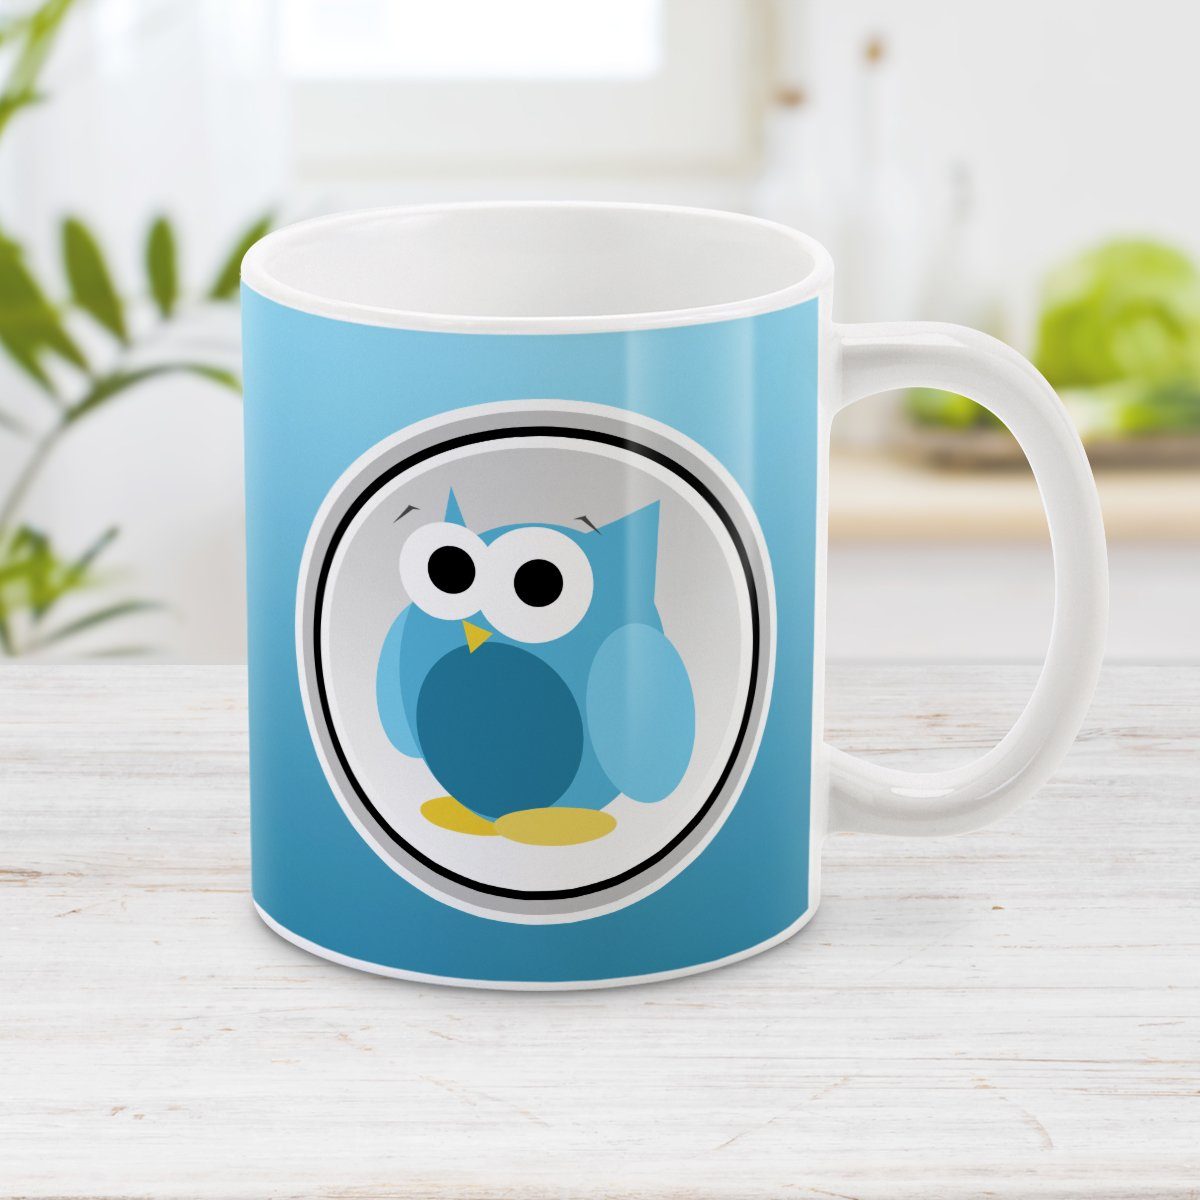 Blue Owl Mug - Funny Cute Blue Owl Mug at Amy's Coffee Mugs